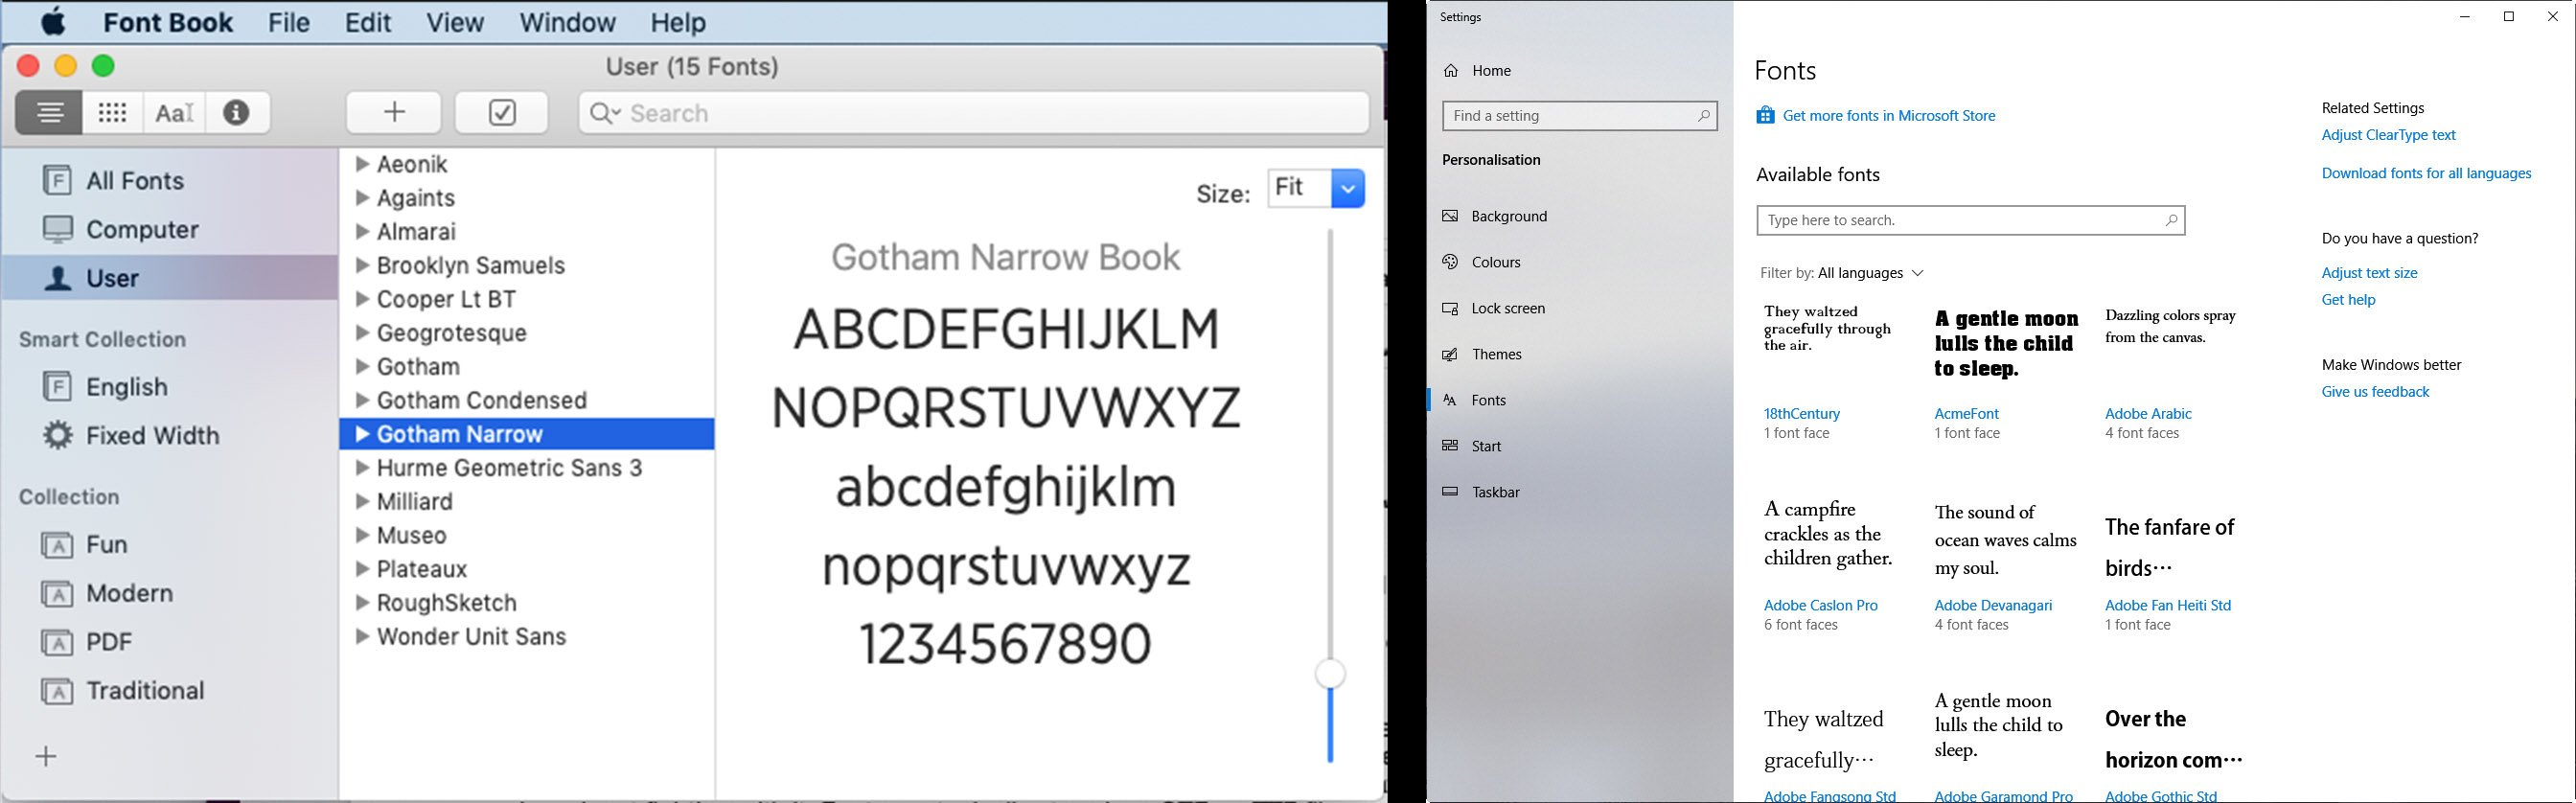 3 mac fontbook windows 10 fonts type